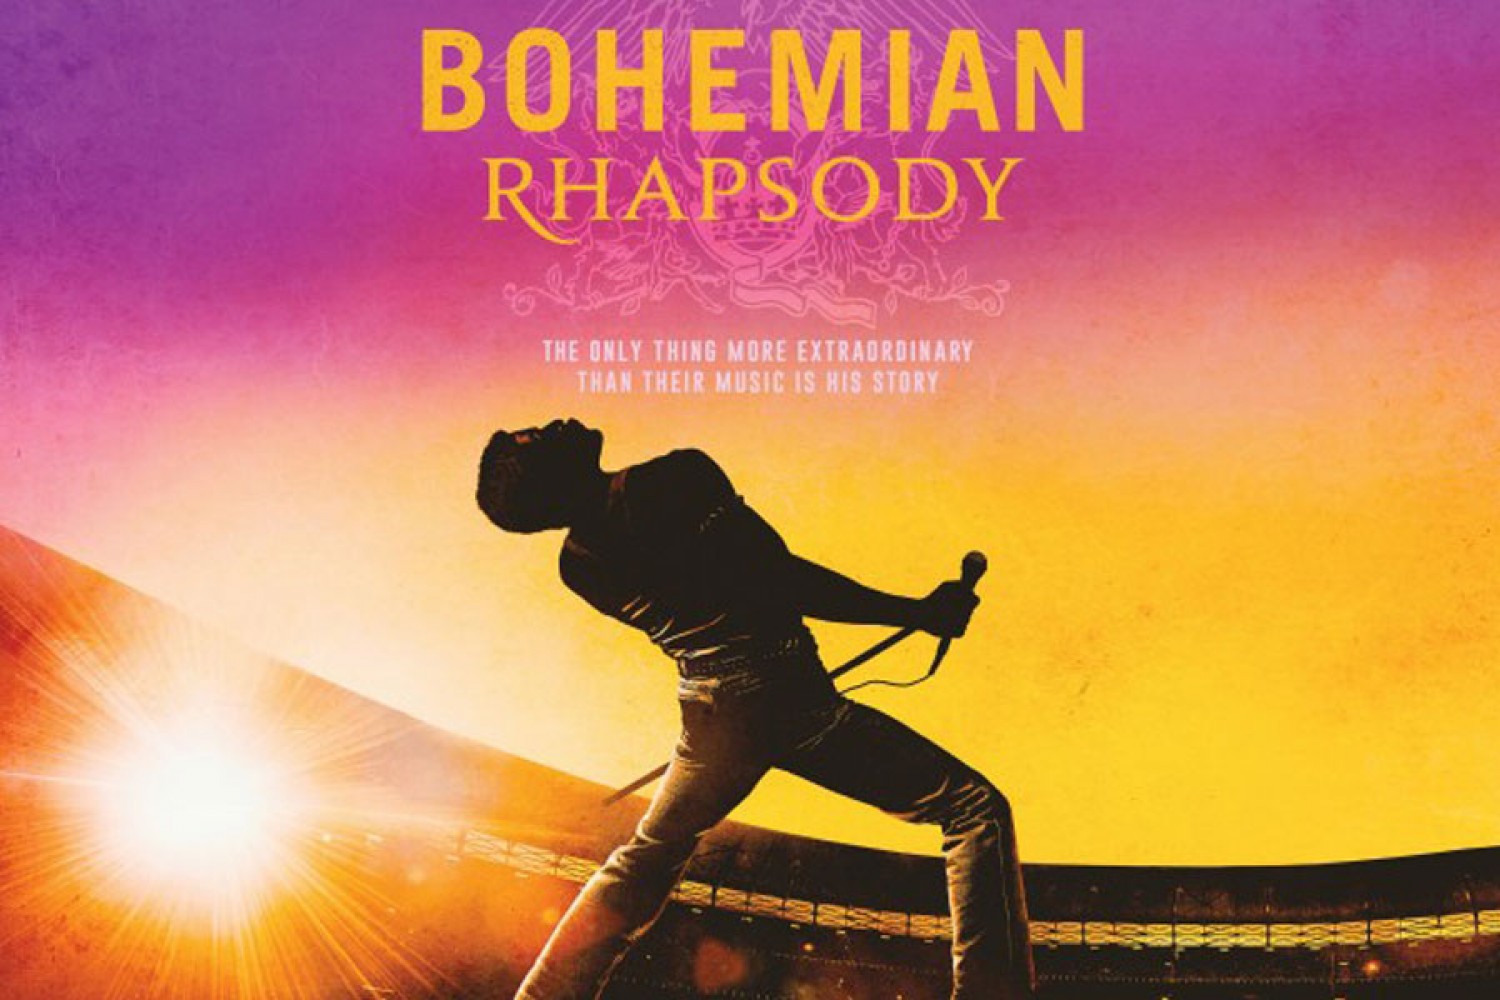 FREE MOVIE SUMMER ~ Bohemian Rhapsody|Show | The Lyric Theatre